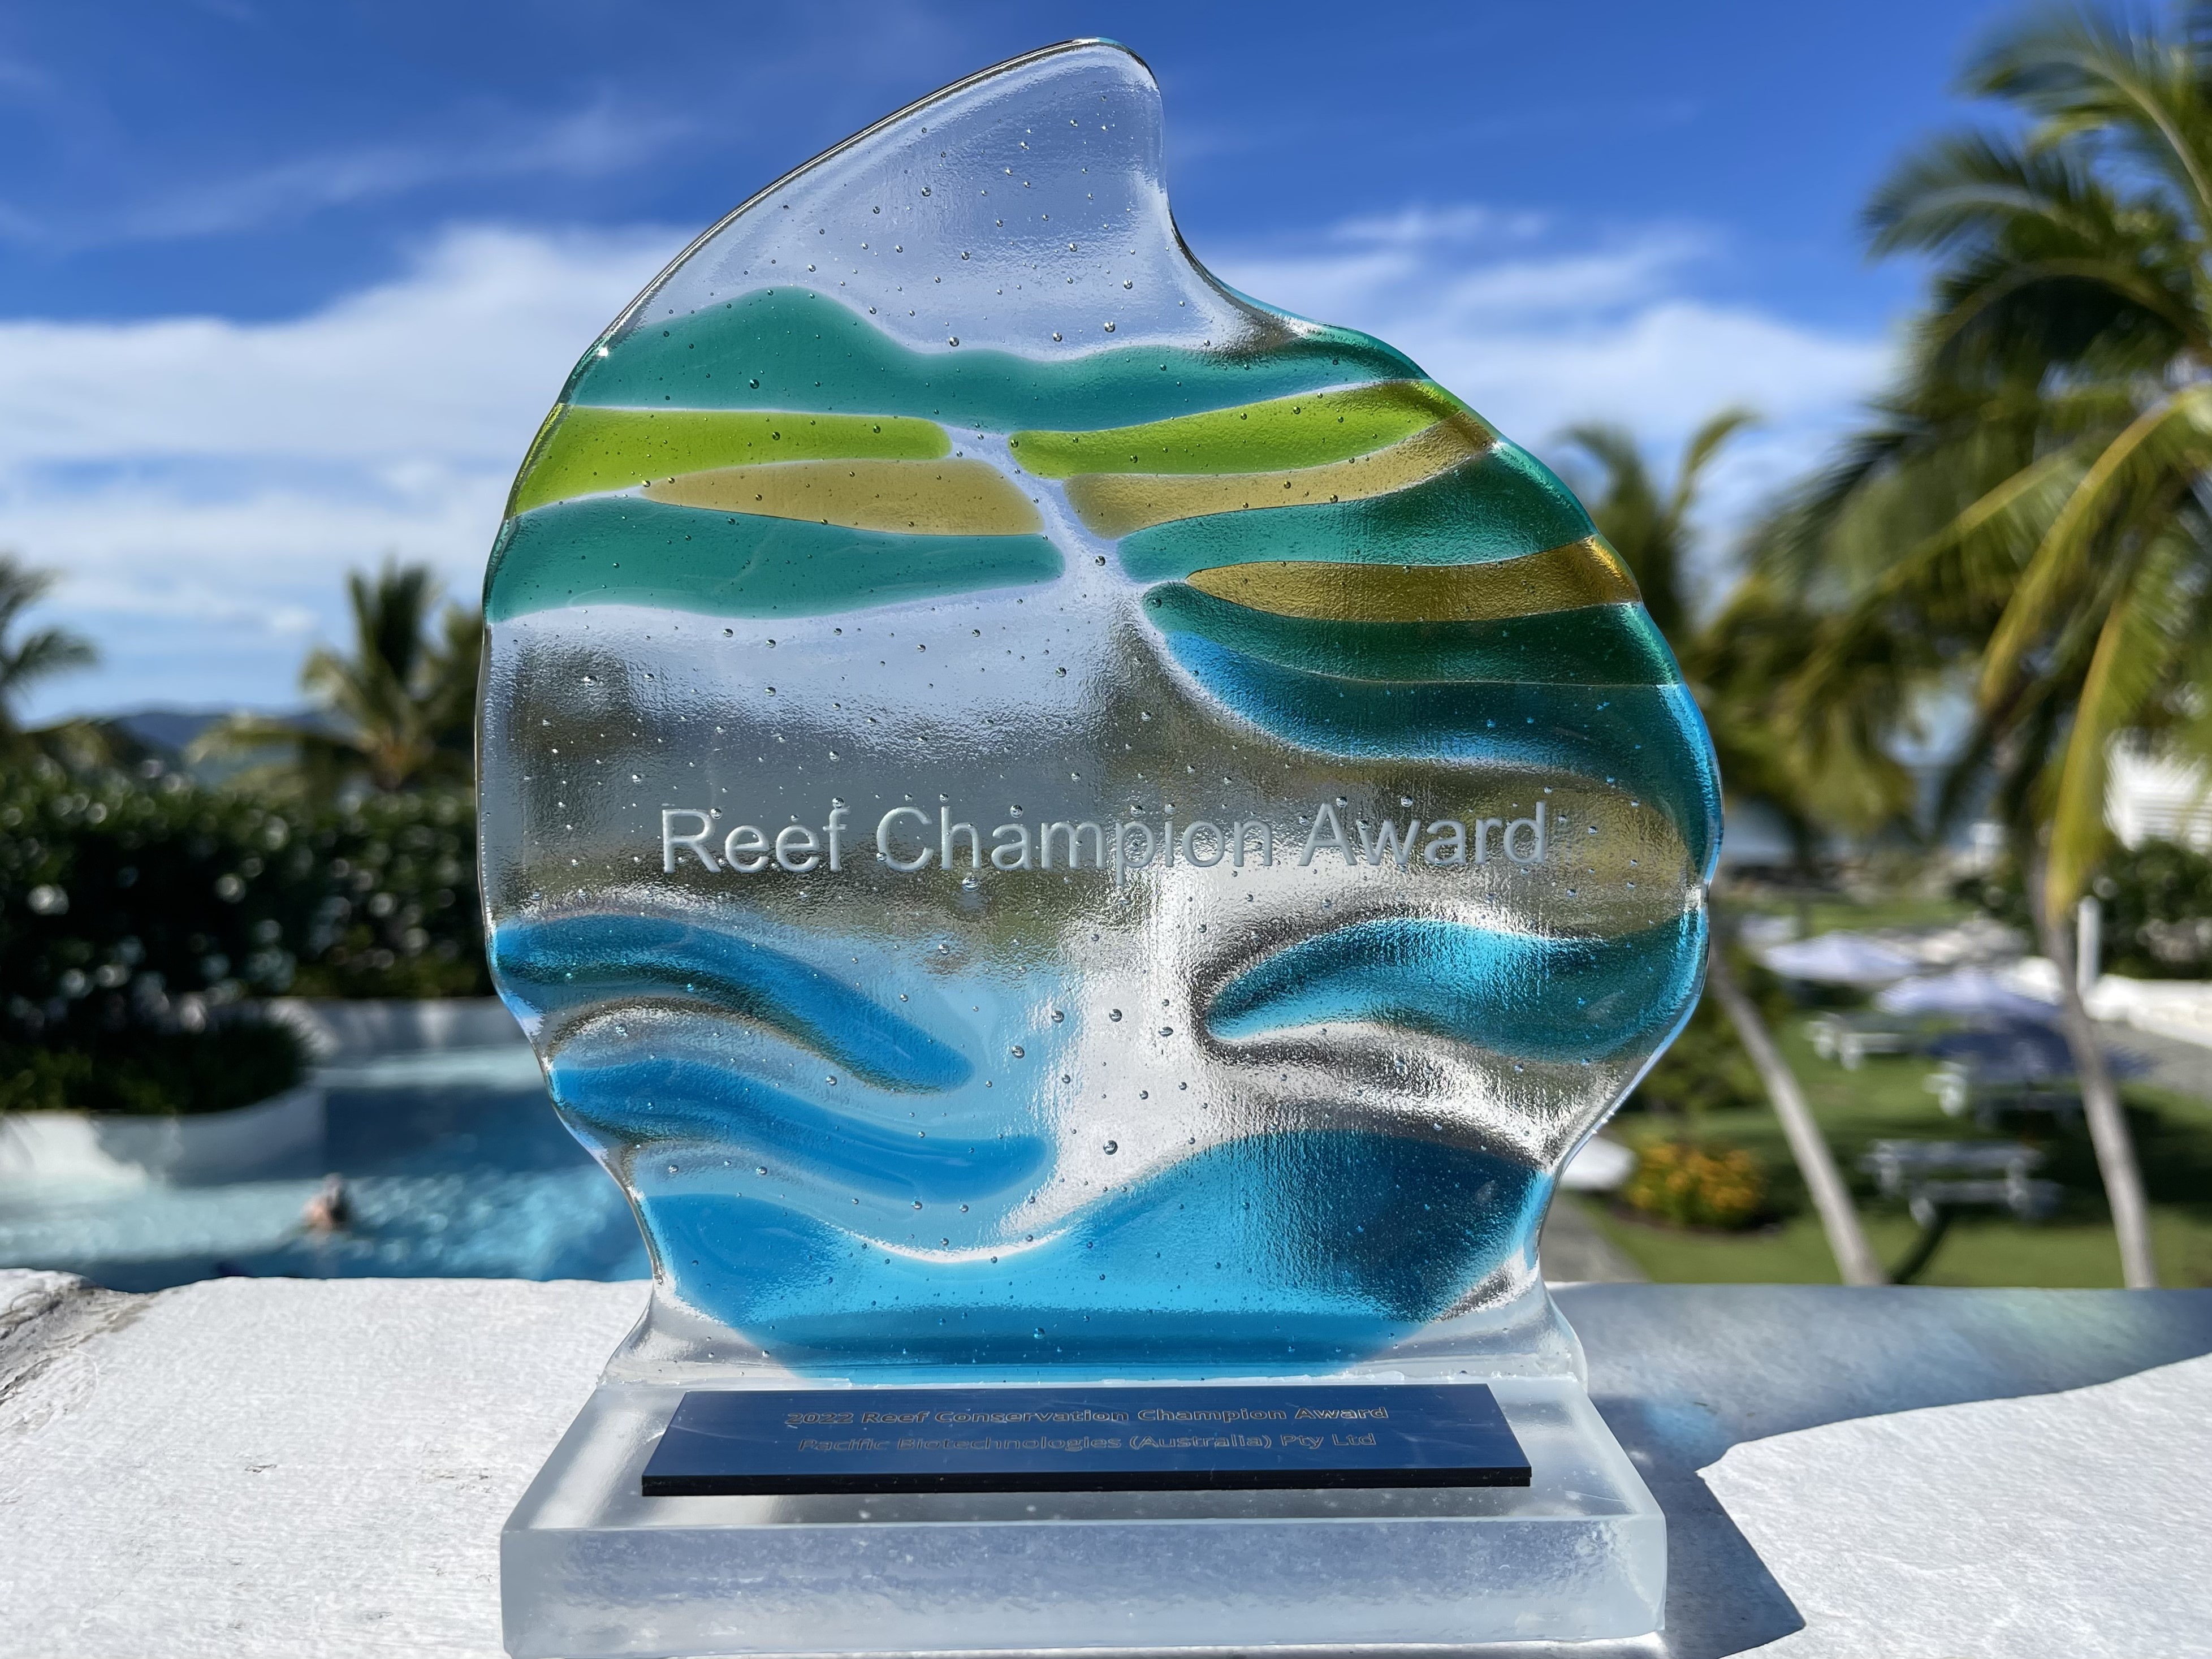 Reef Champions Award Trophy